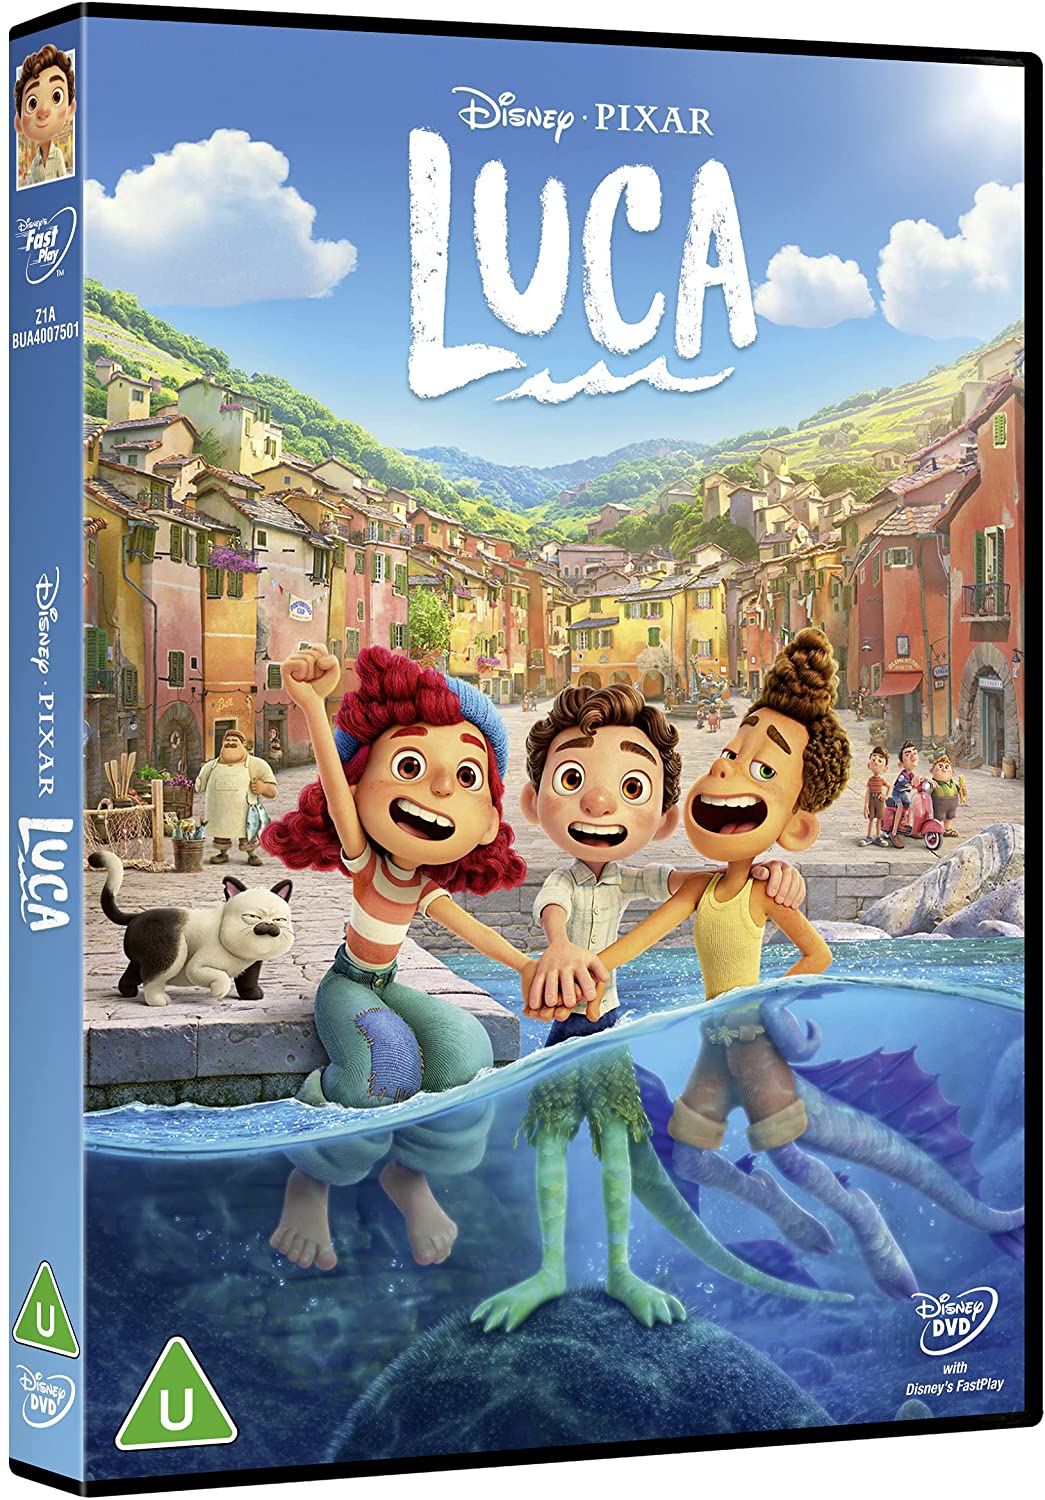 Disney & Pixar's Luca DVD [2021] - Animation [DVD]